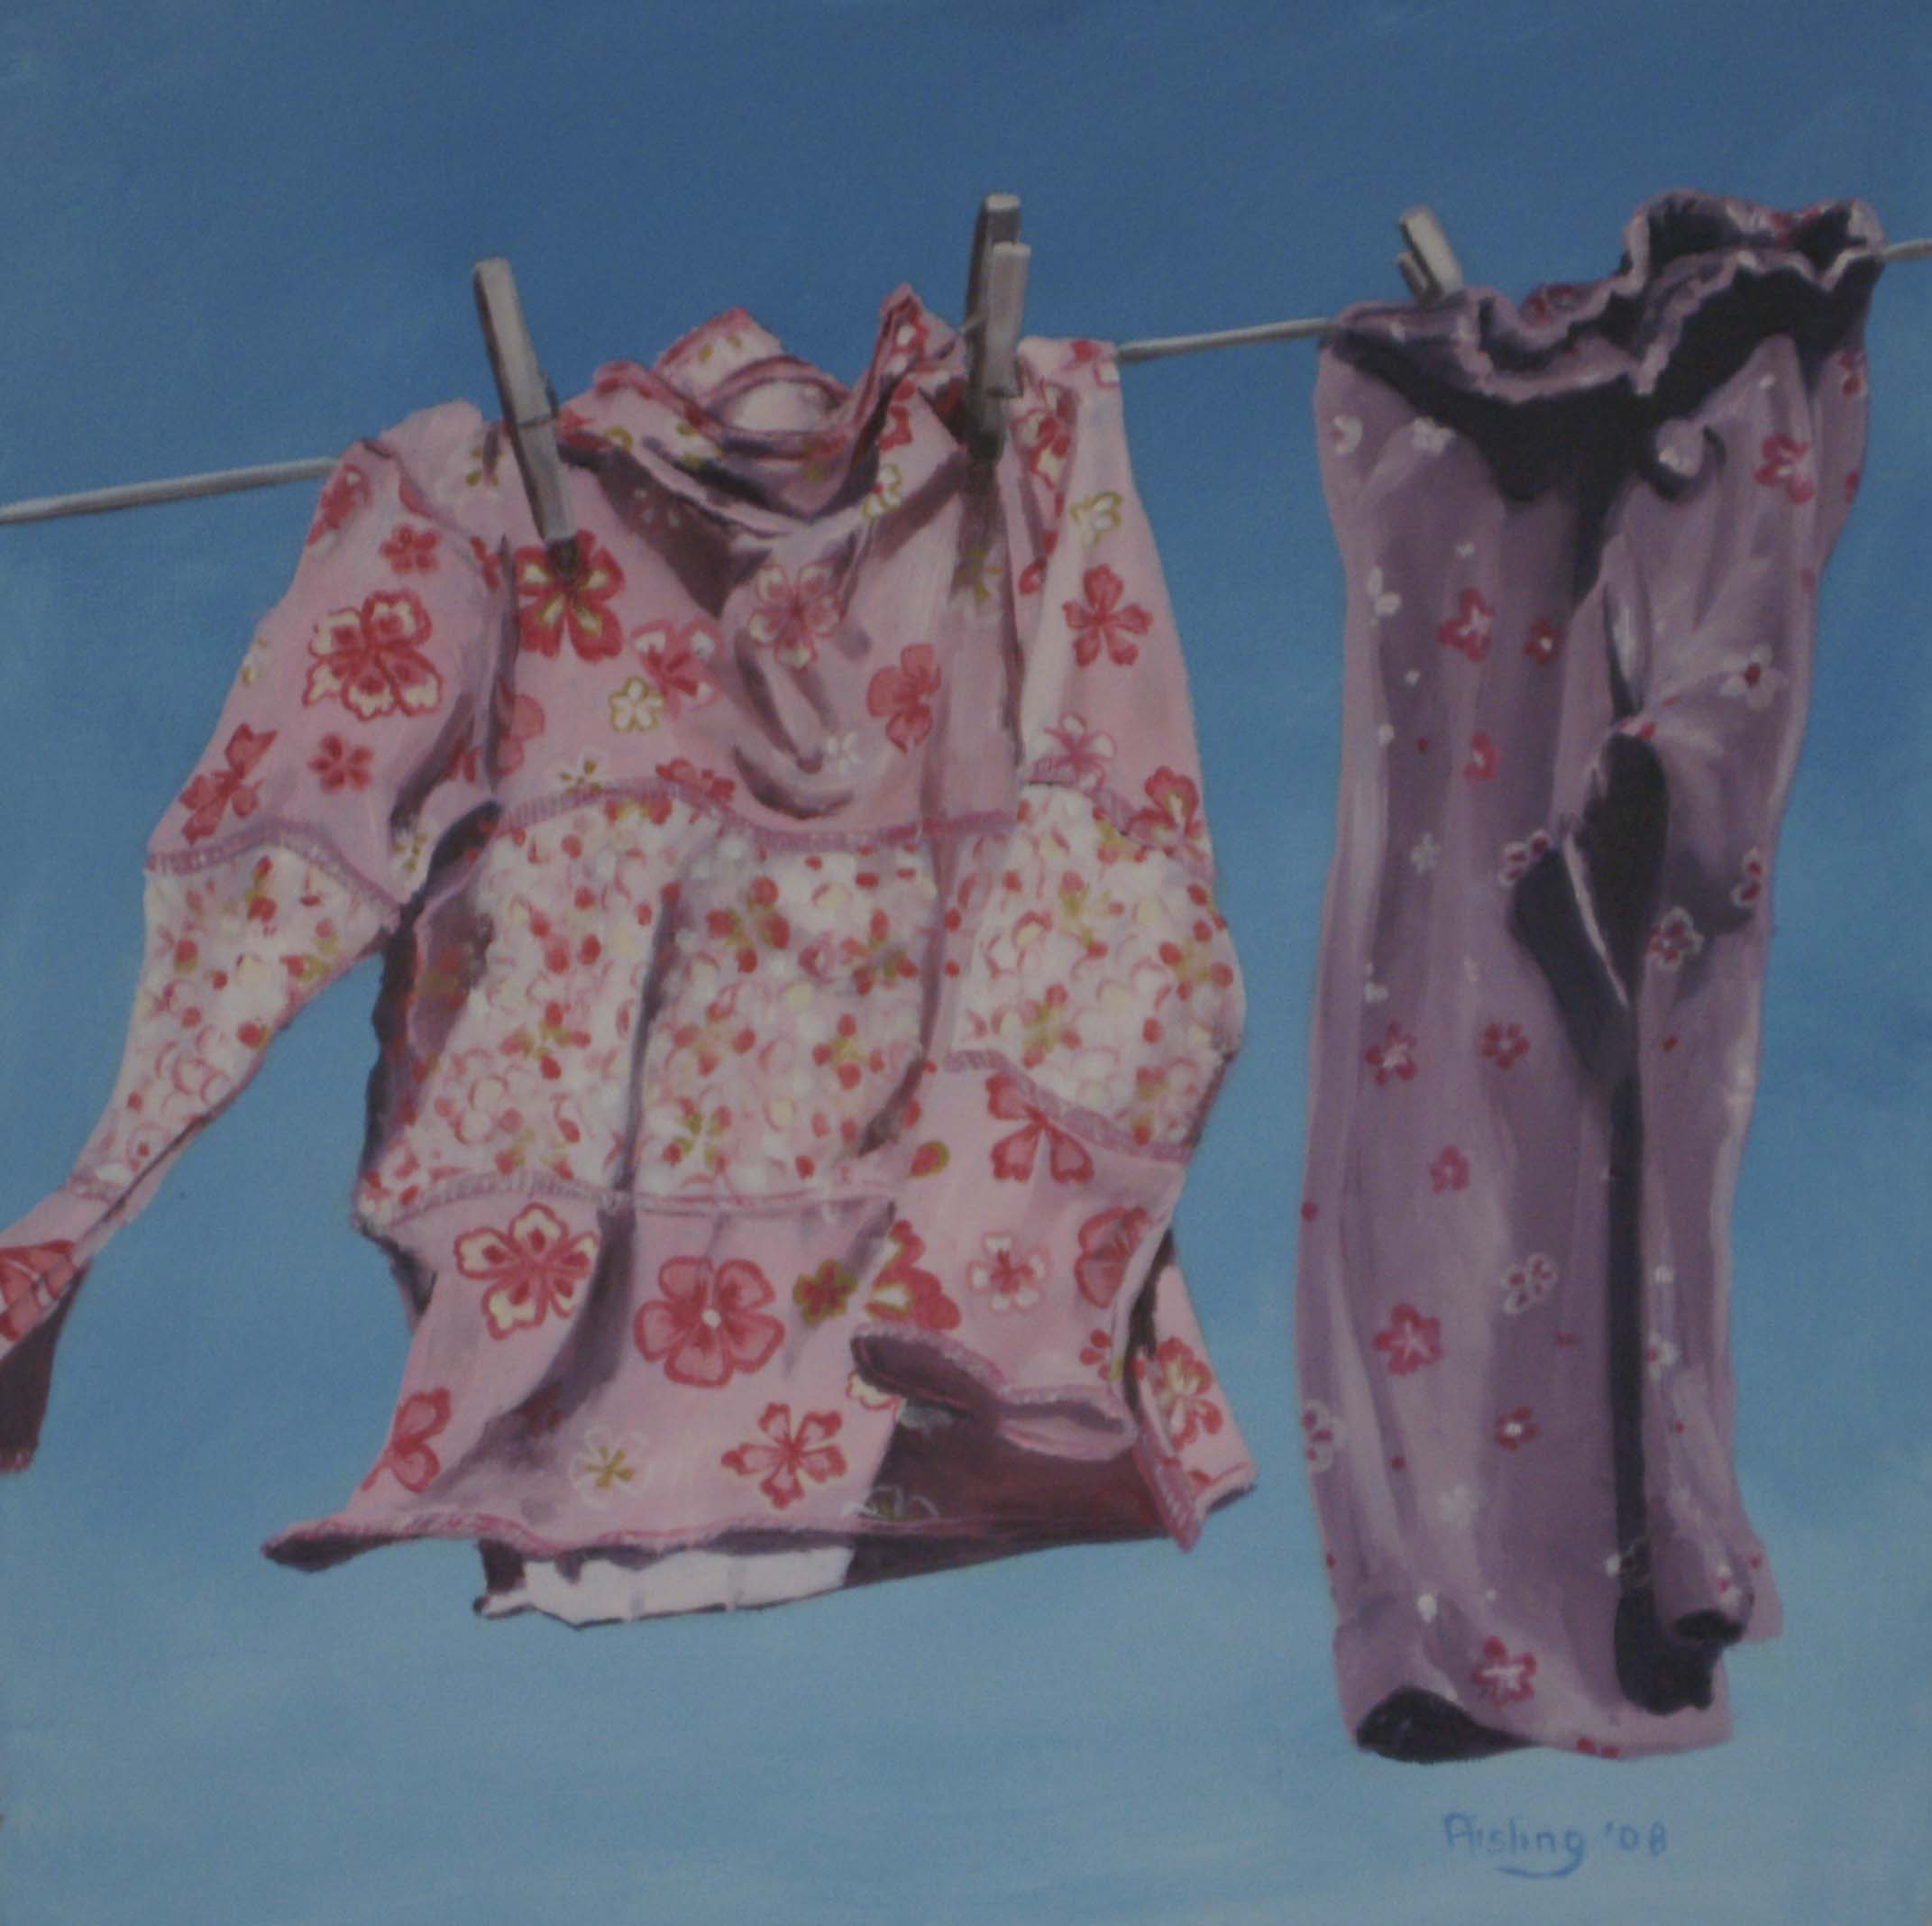 Kalin's clothes | Oil on canvas, 30cm x 30cm